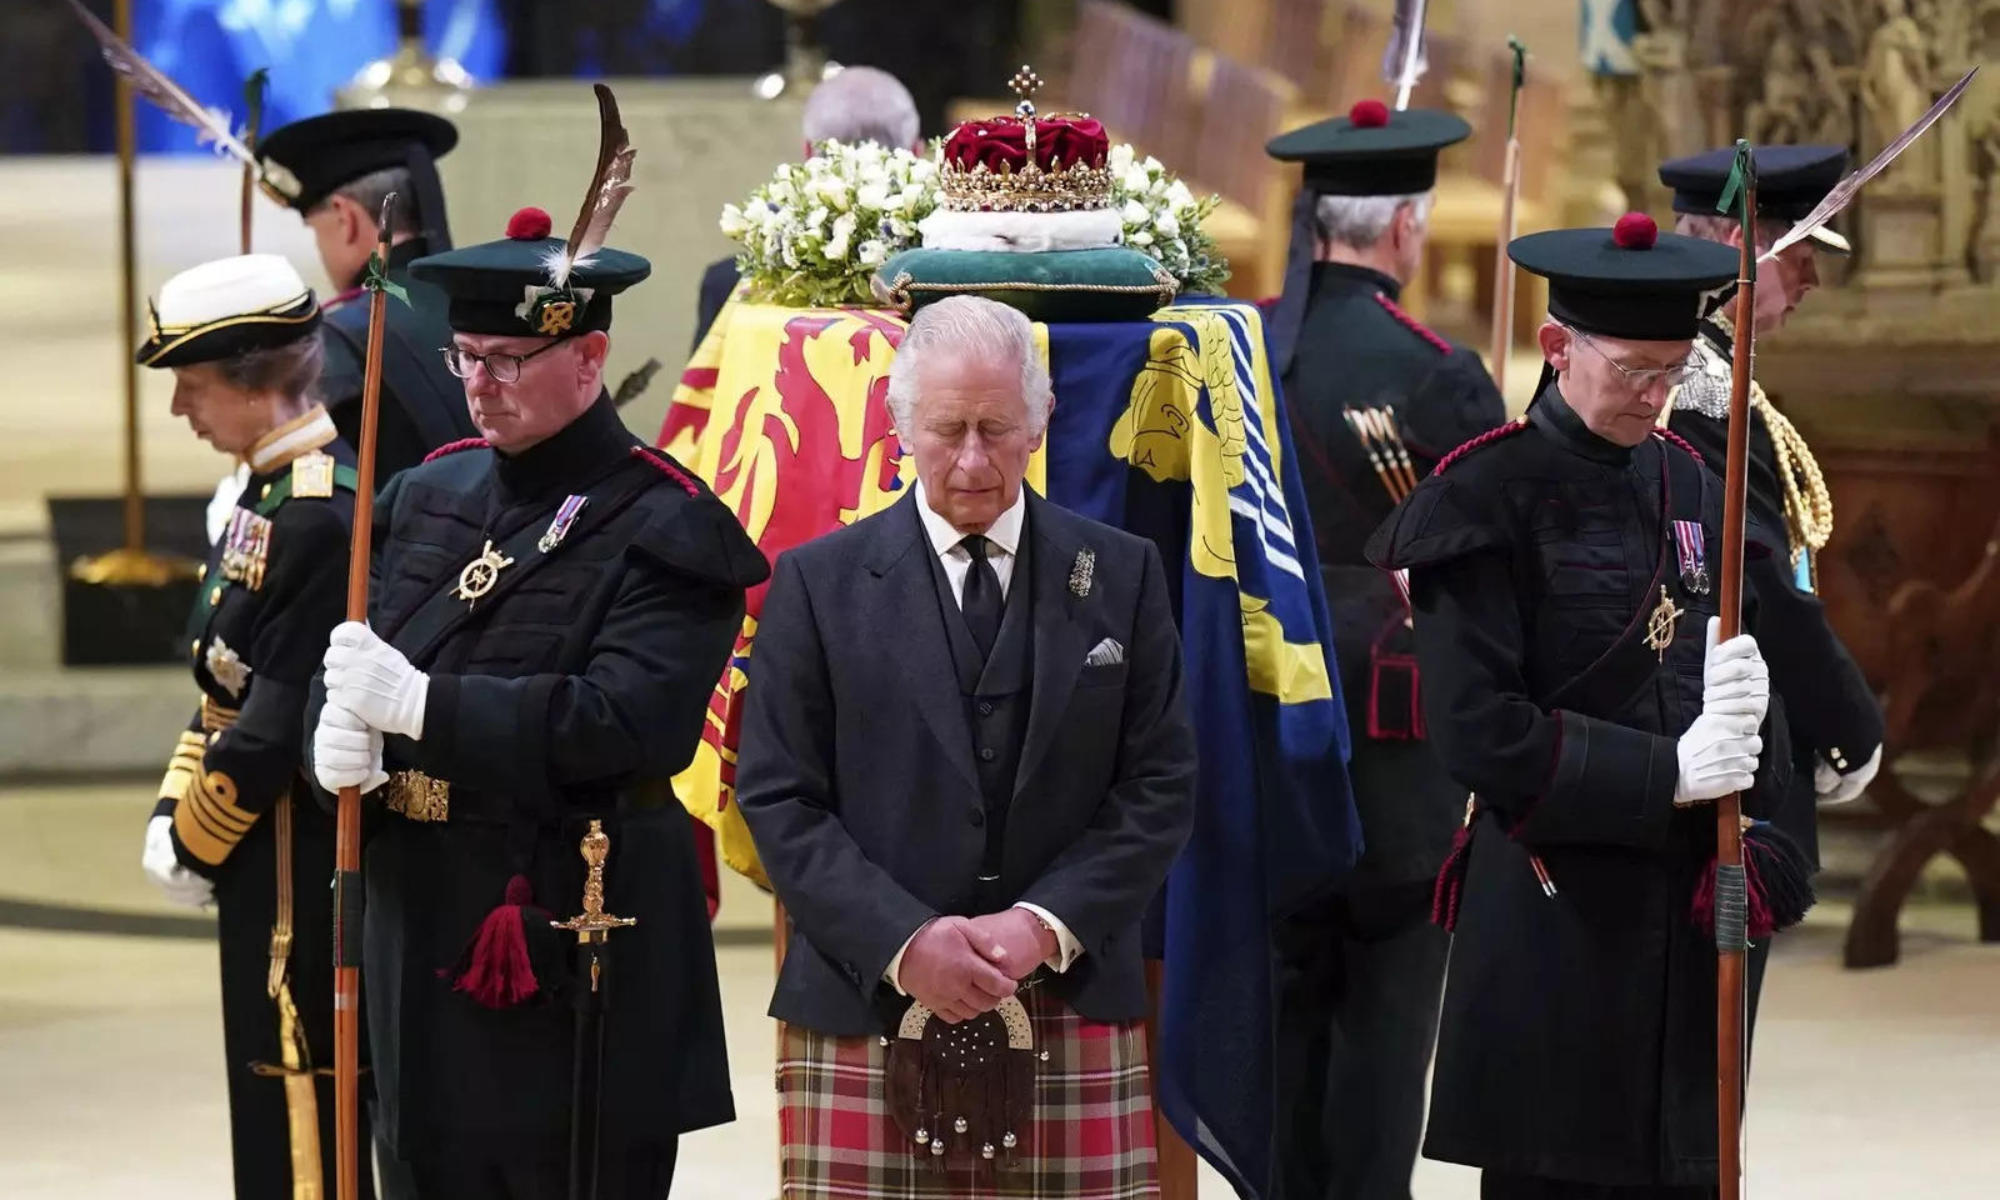 Queen Elizabeth II funeral, buried at Windsor Castle's St. George's Chapel_40.1